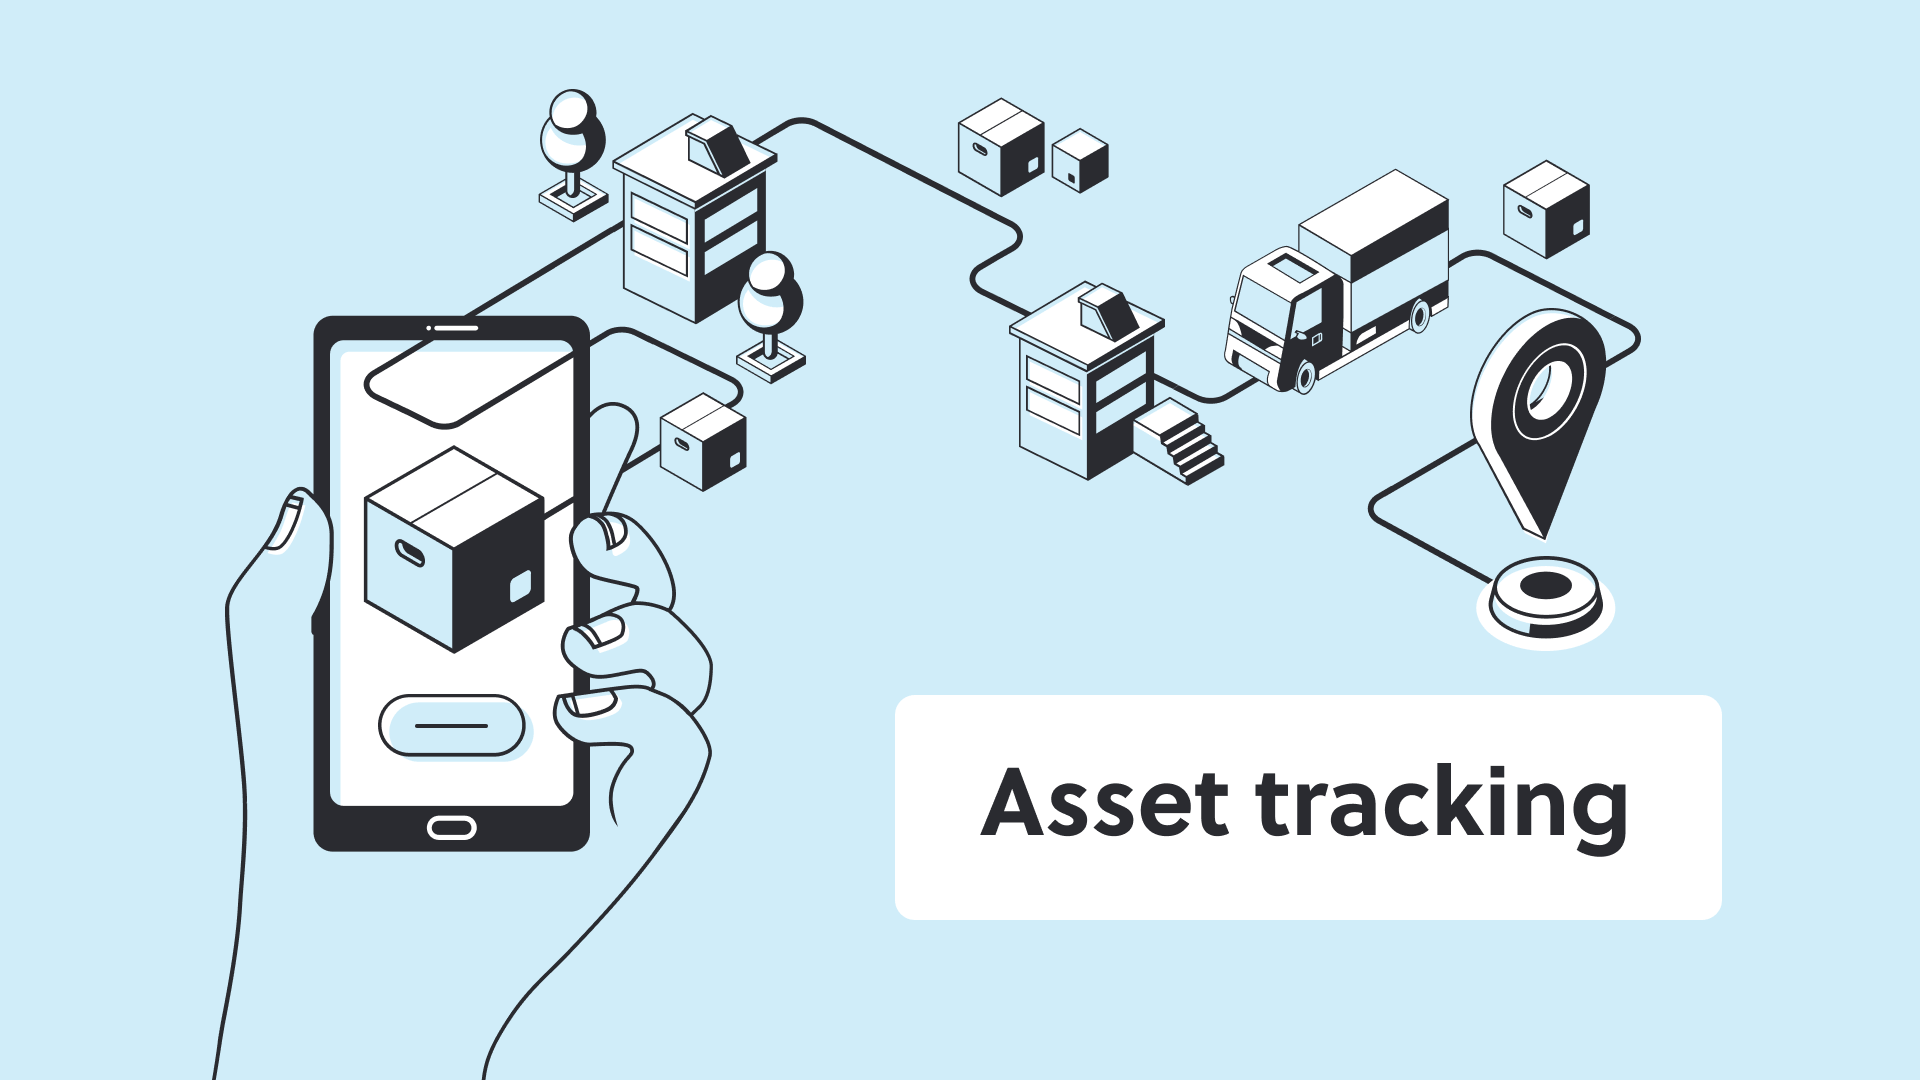 3.Asset tracking